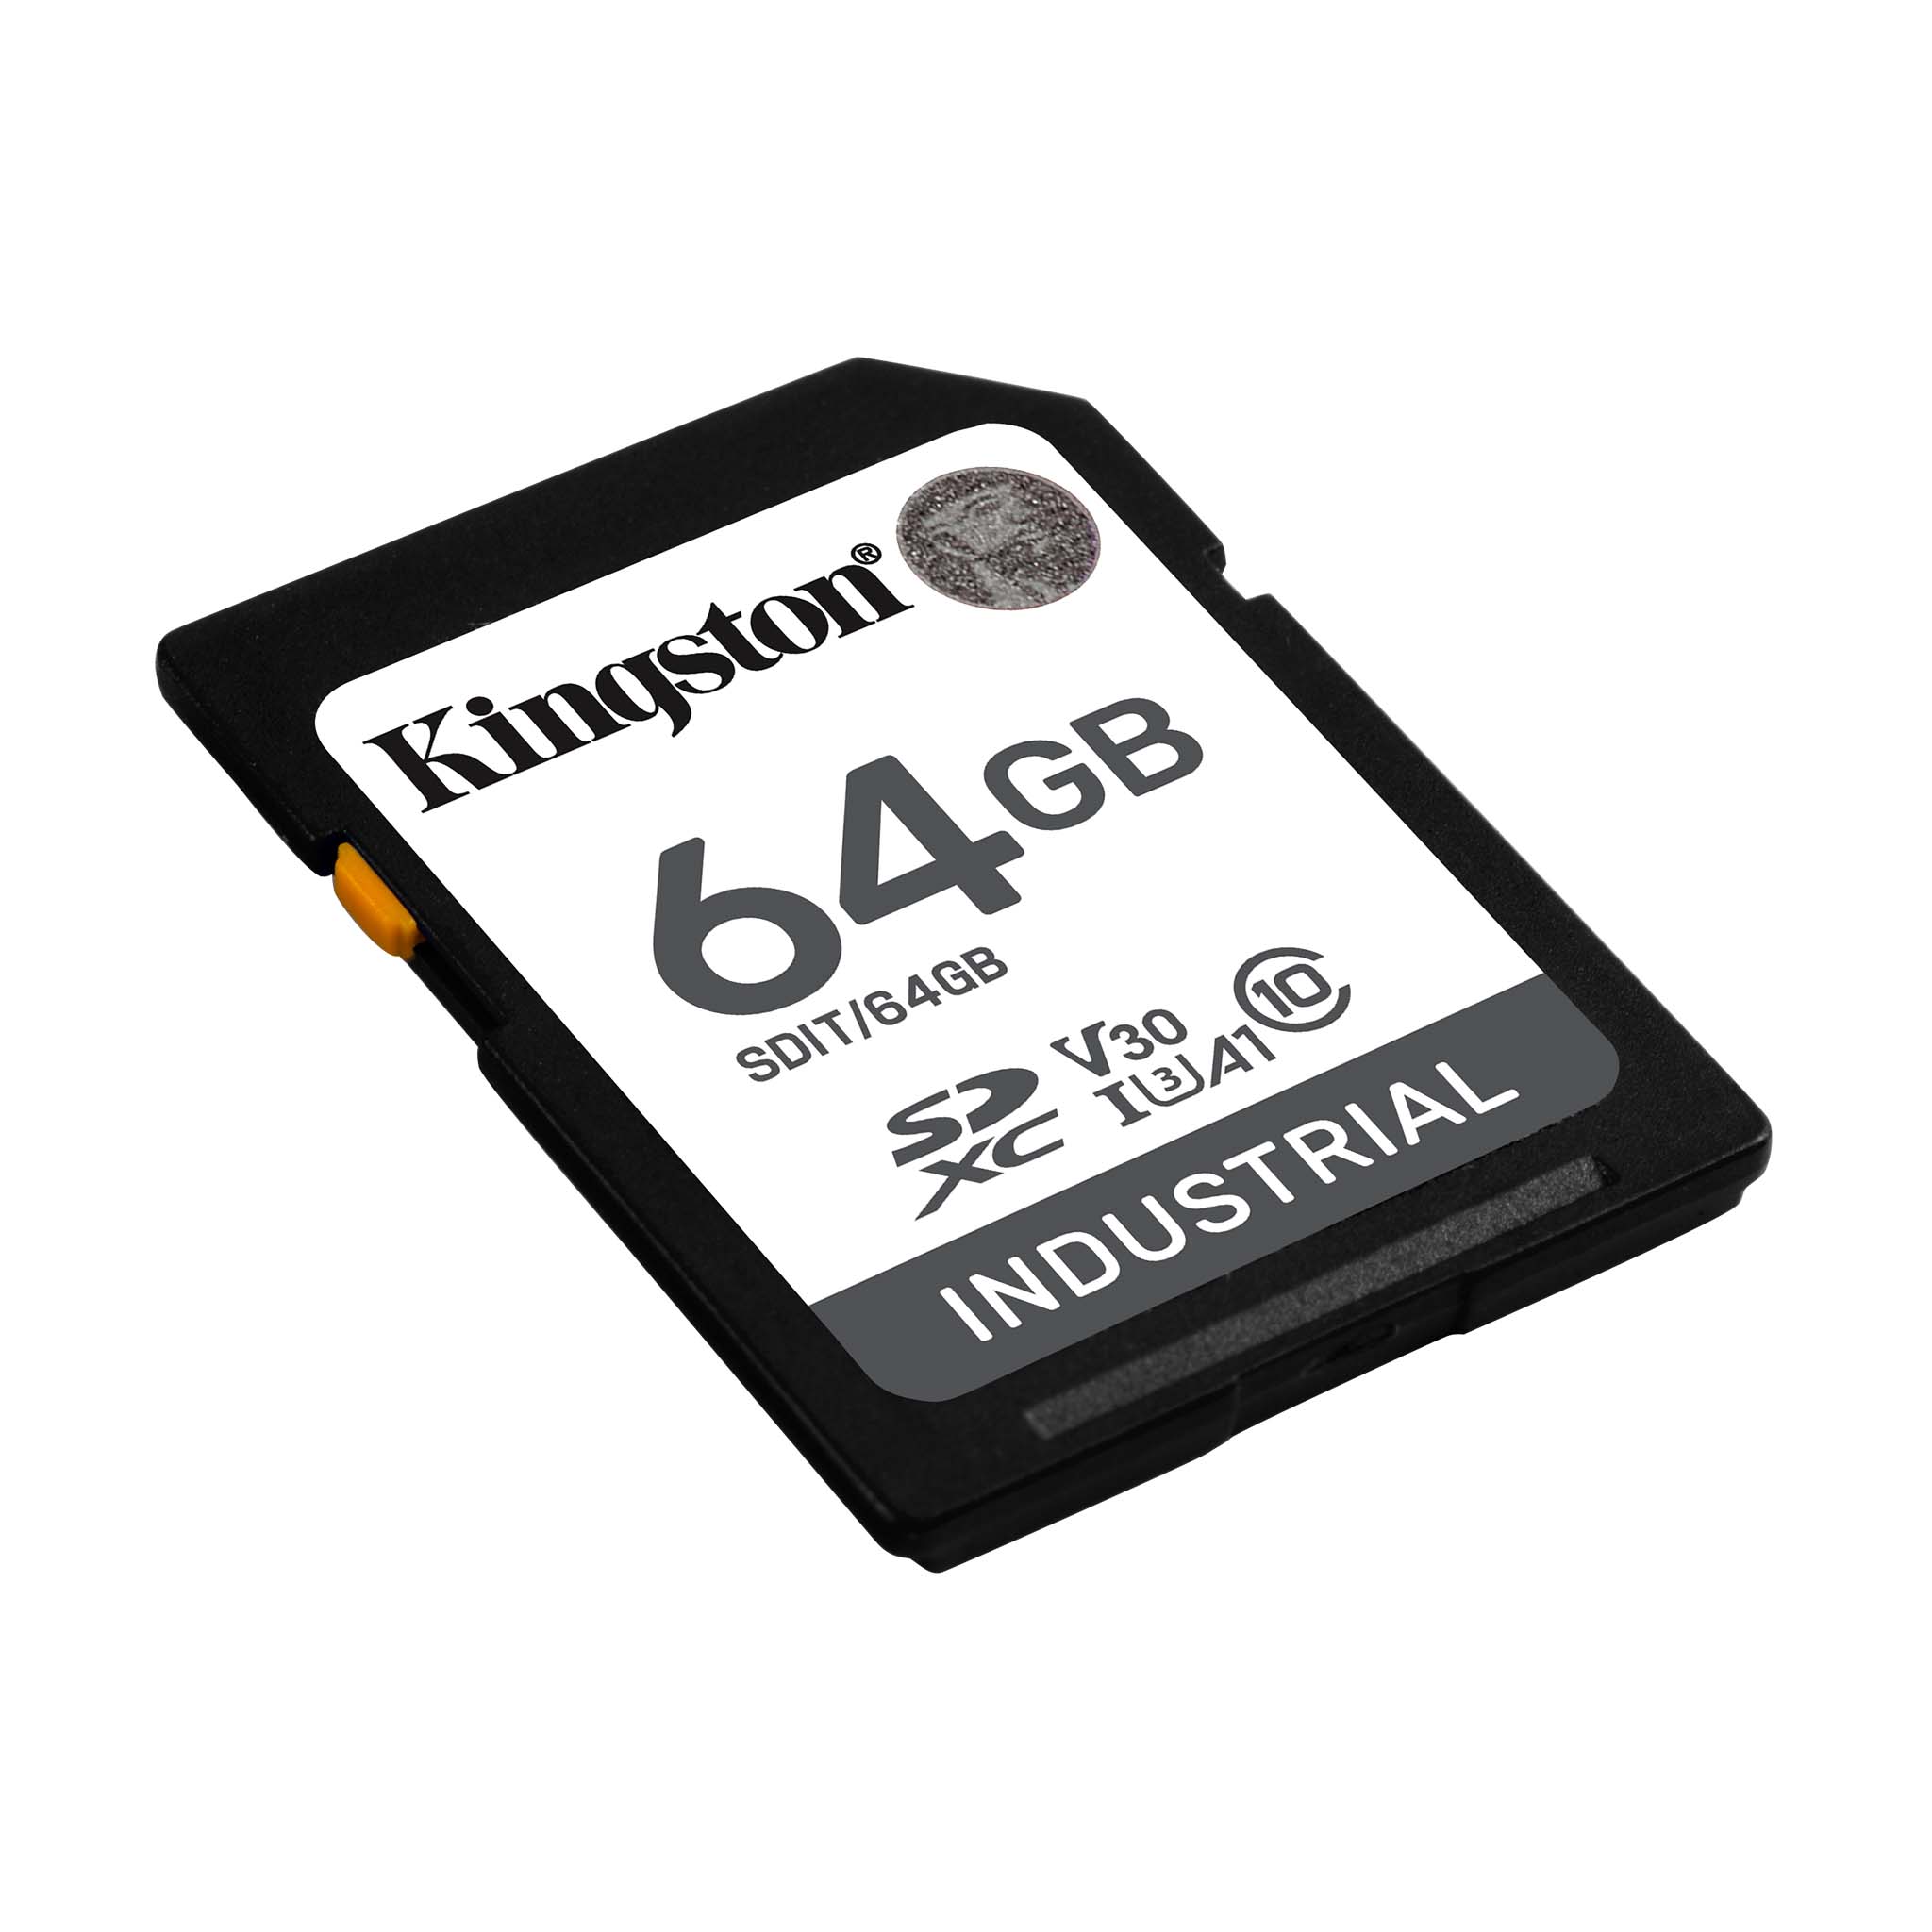 Industrial Grade SD Card - Kingston Technology